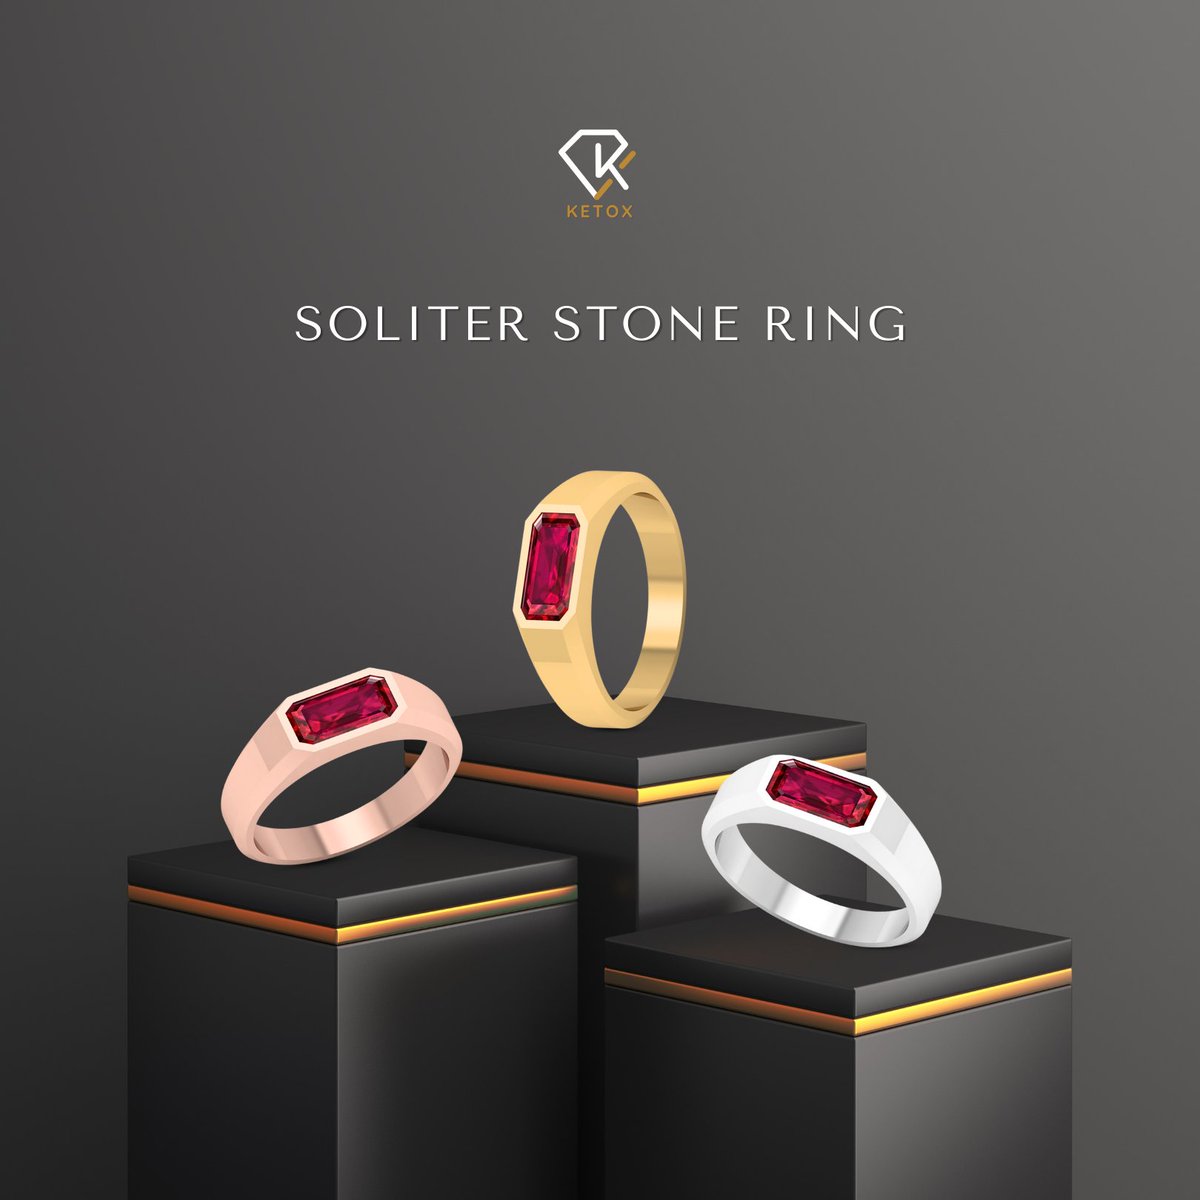 ✨ Sparkle in Soliter Stone Ring ✨
#SoliterStoneRing #JewelryLovers #LuxuryStyle #TimelessElegance #DiamondGlow #SparkleAndShine
#ClassicChic #FineJewelry #DiamondDreams #FashionForward #ChicAndStylish #Ketoxjewellery

🎯 For More Info:

==> ketoxjewelry.com